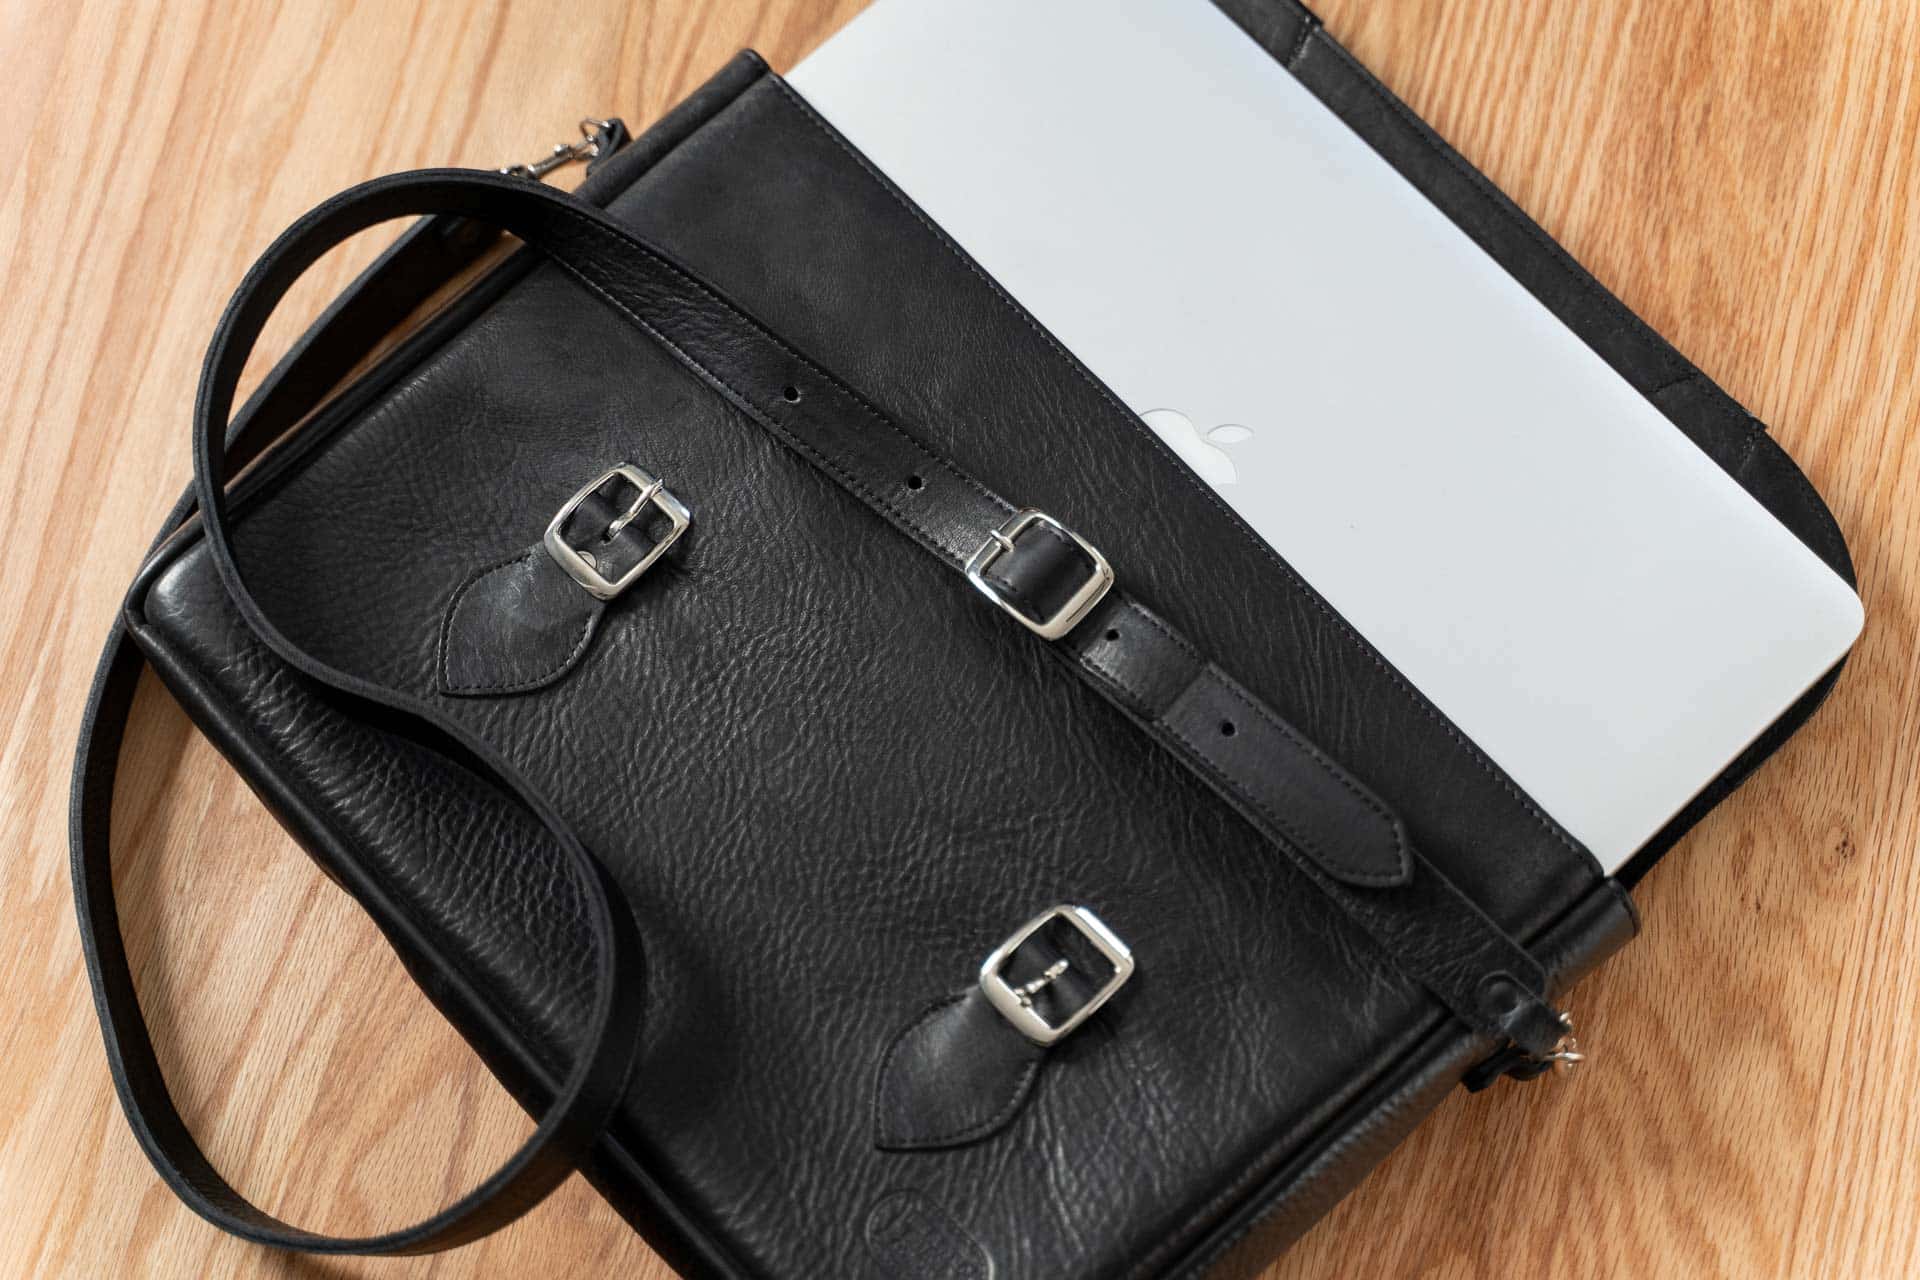 Leather Attache Case - Black - Fits 15 inch laptop